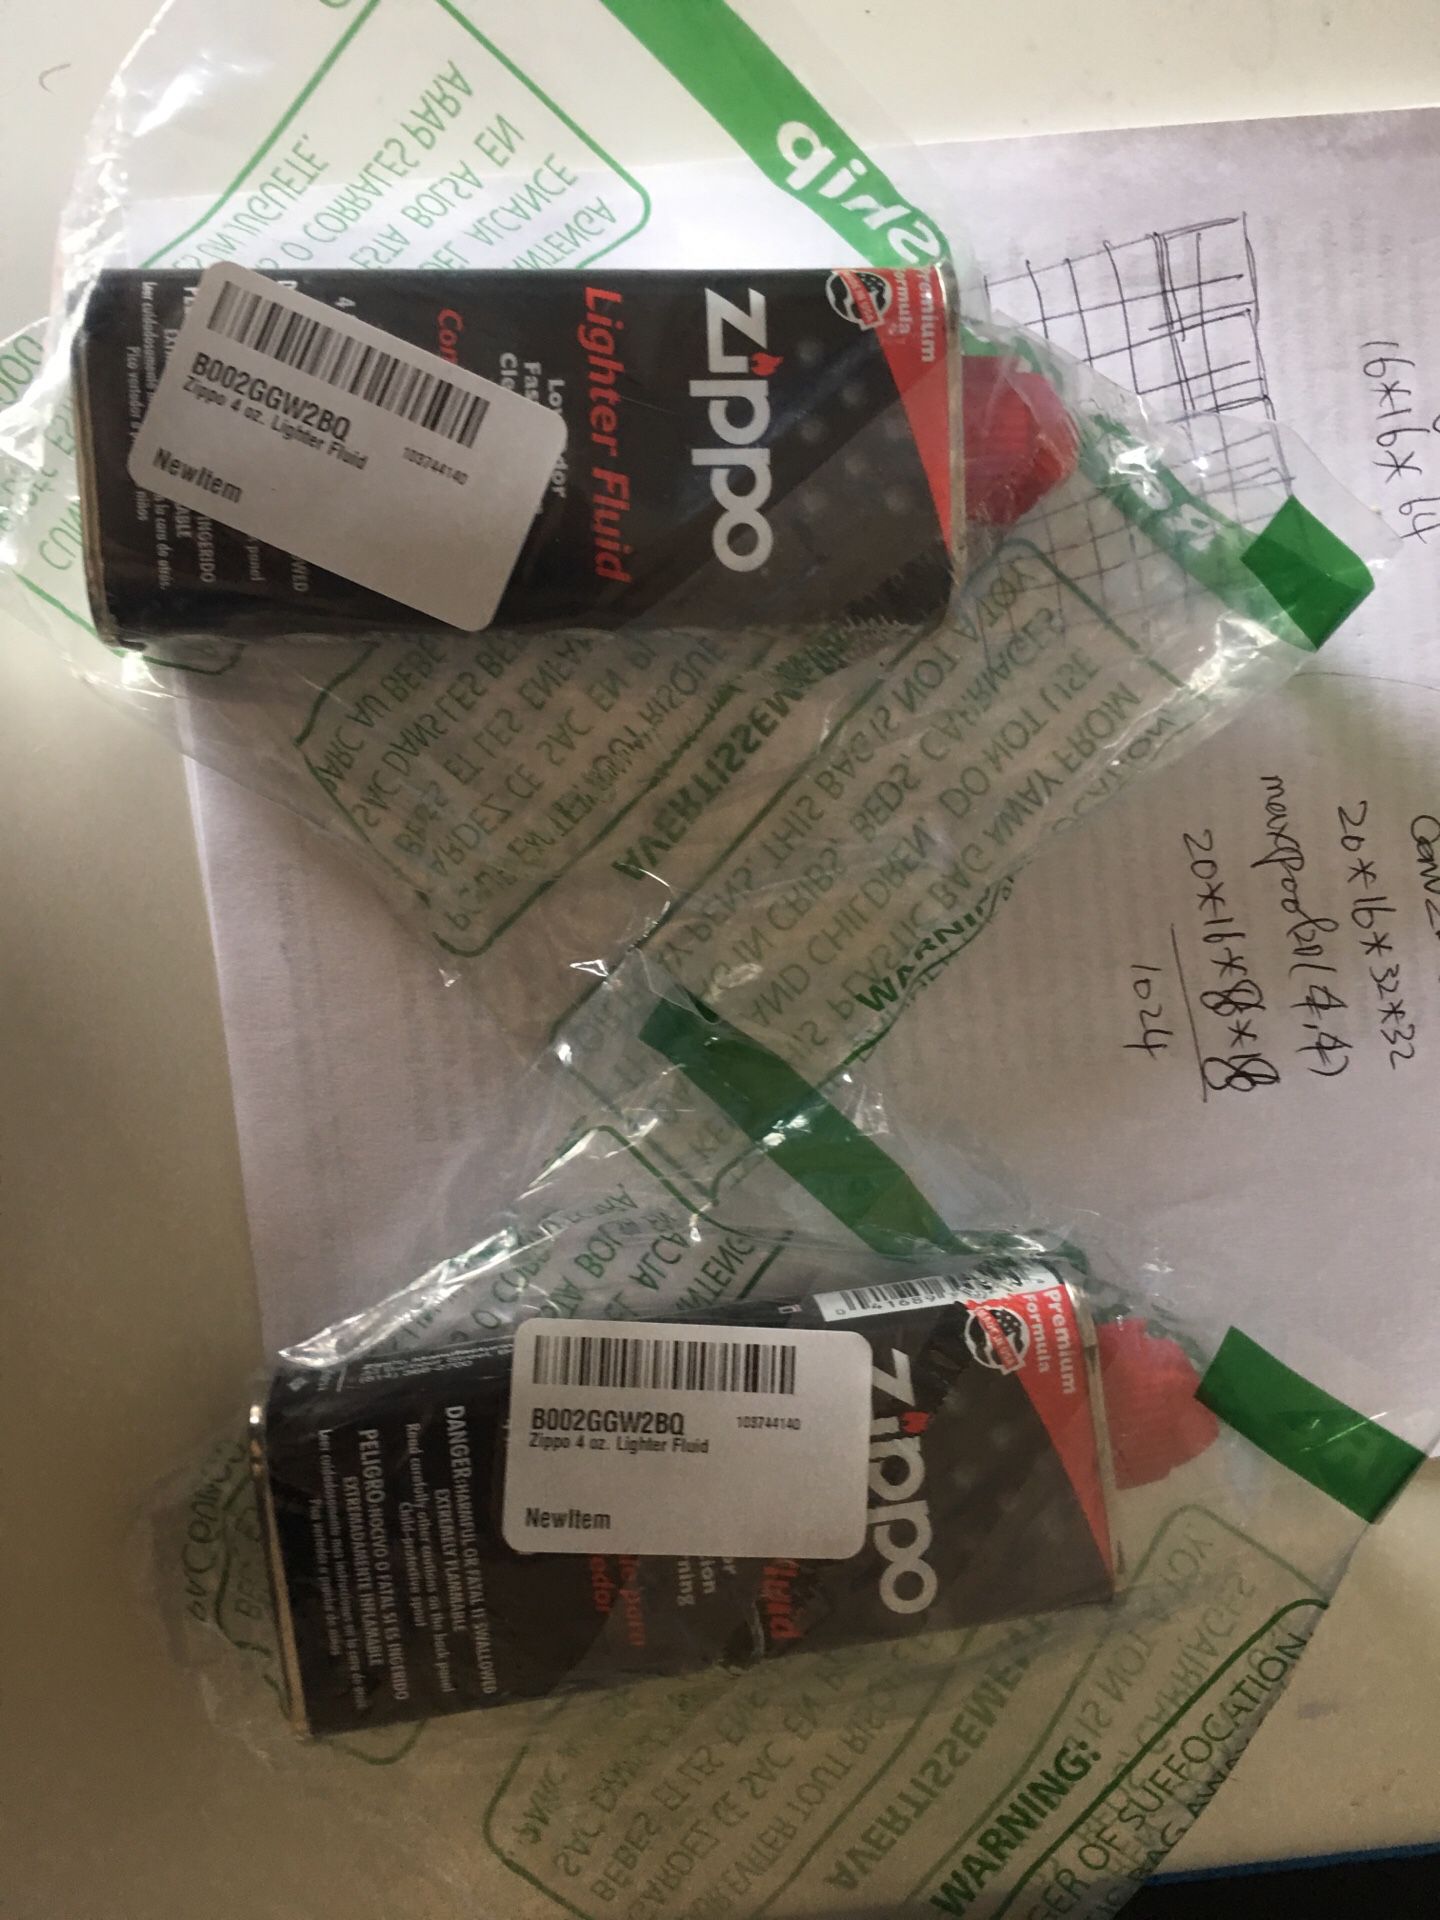 Zippo lighter fluid 4 oz